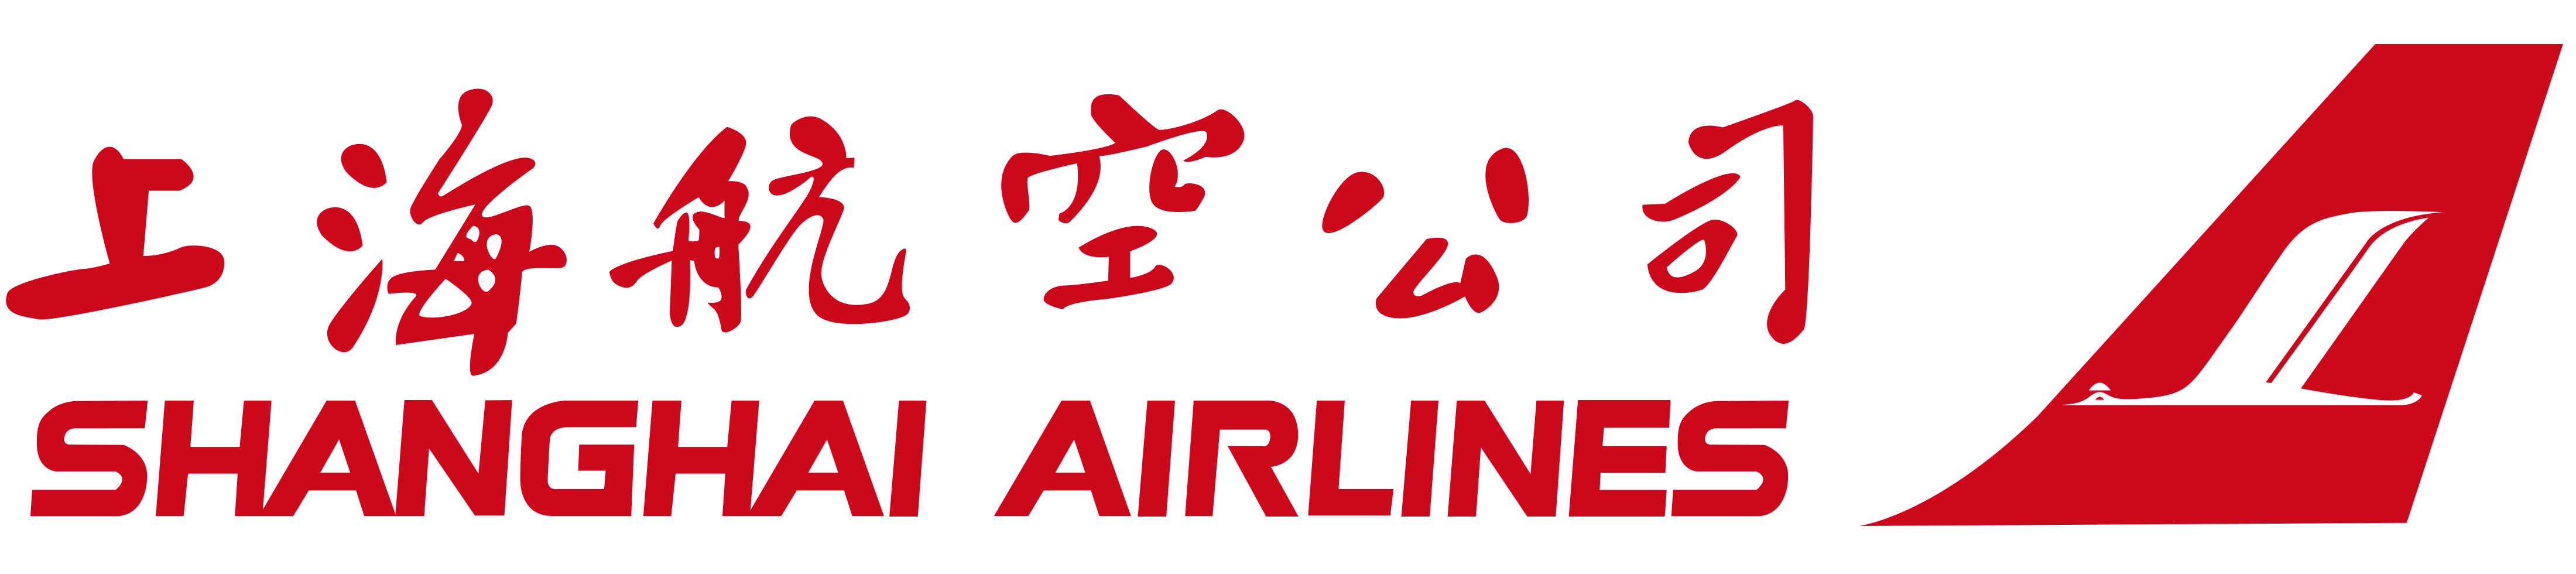 Shanghai Airlines logo, logotype